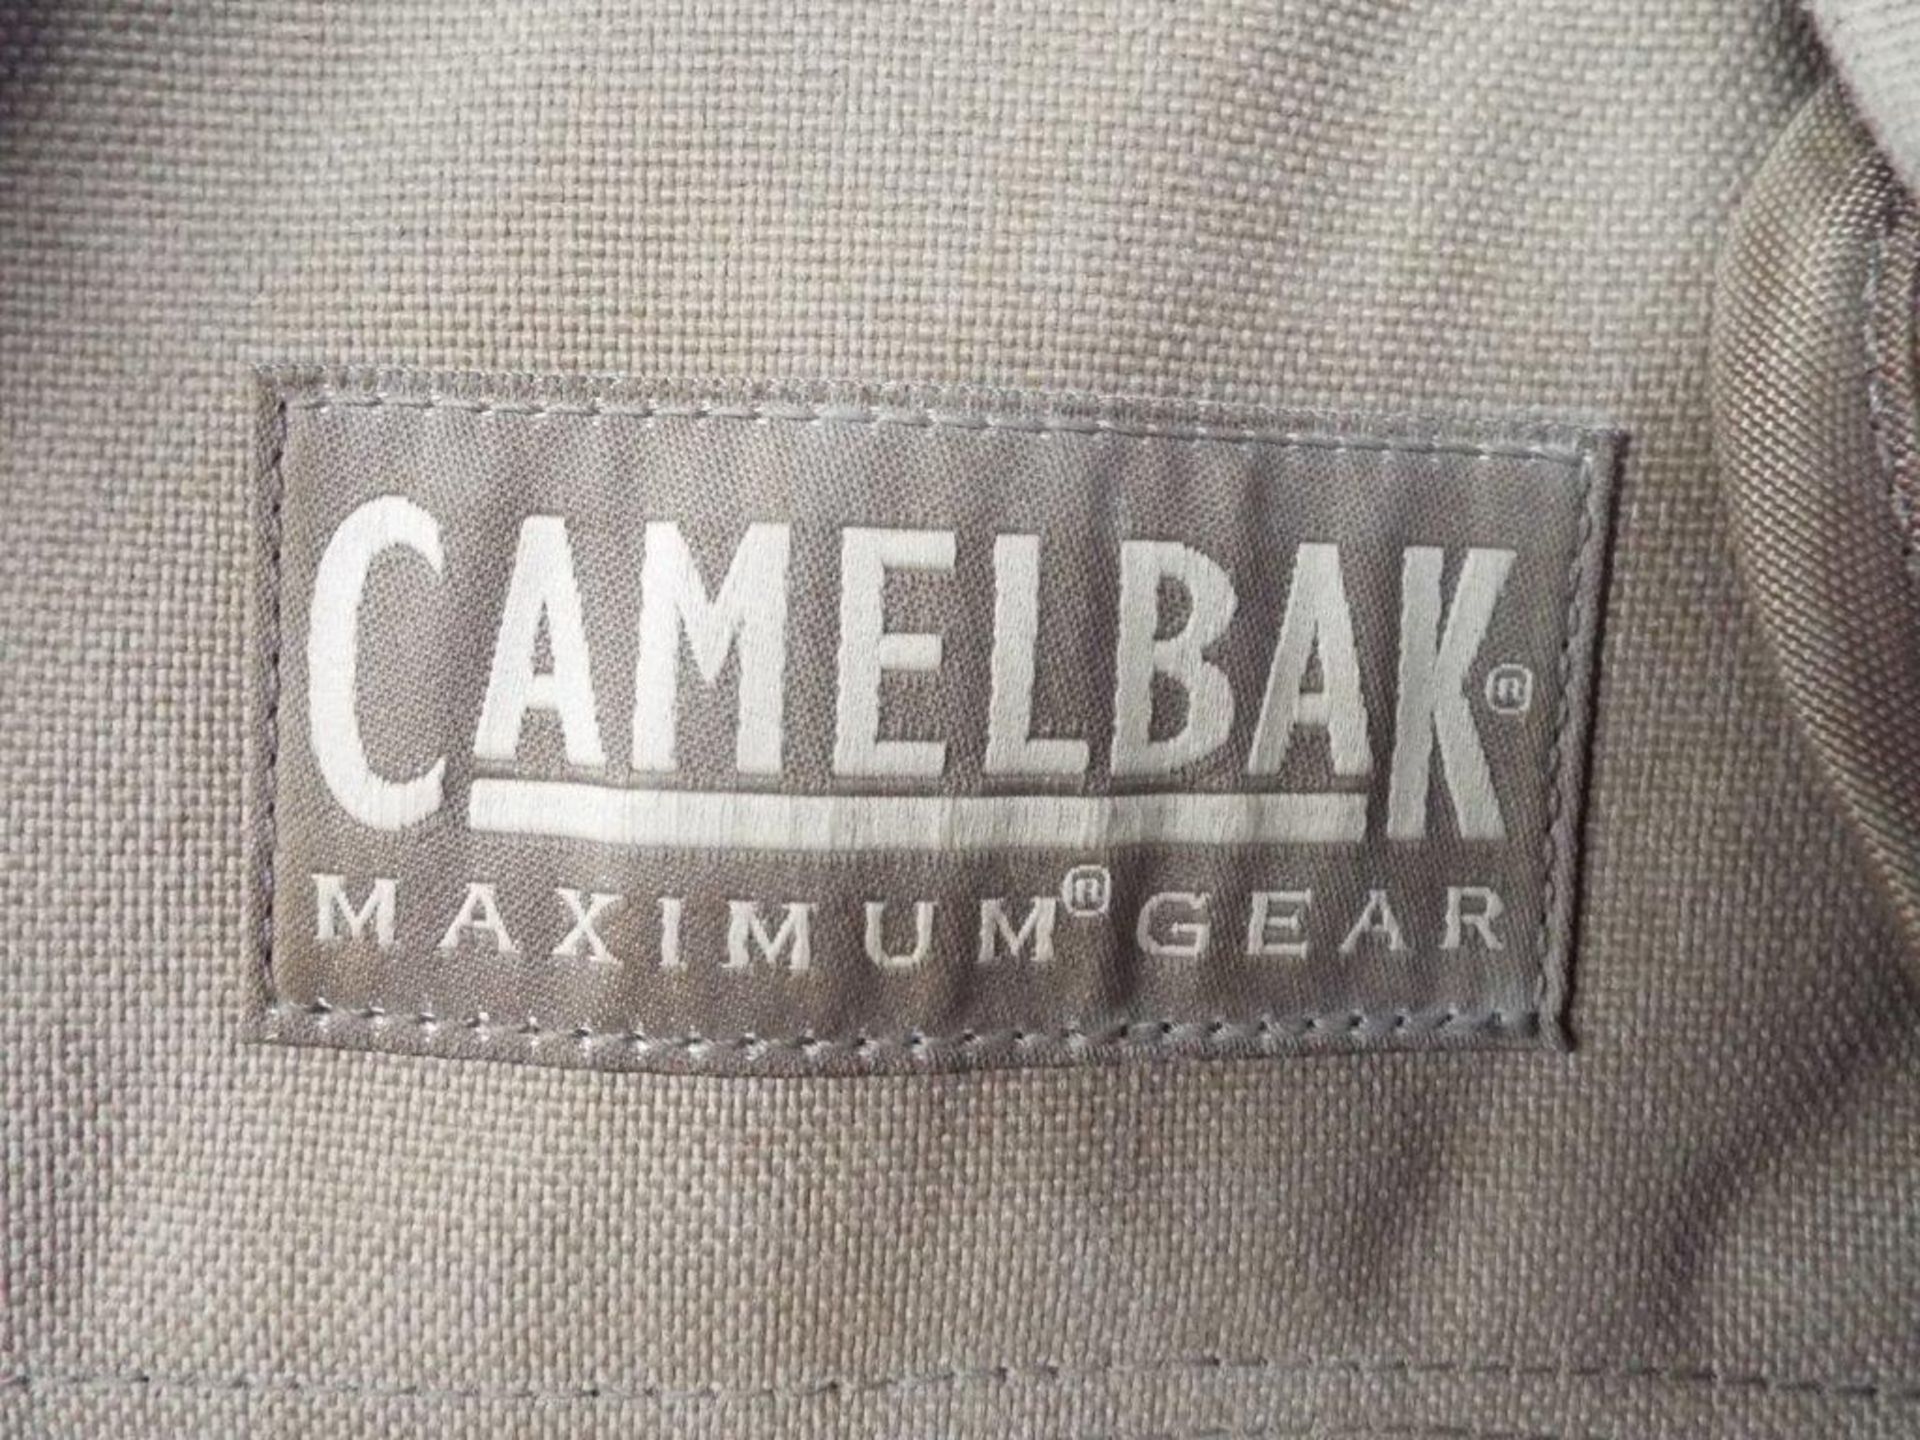 10 x Camelbak Squadbak 25L Military Hydration Backpack - Image 4 of 9